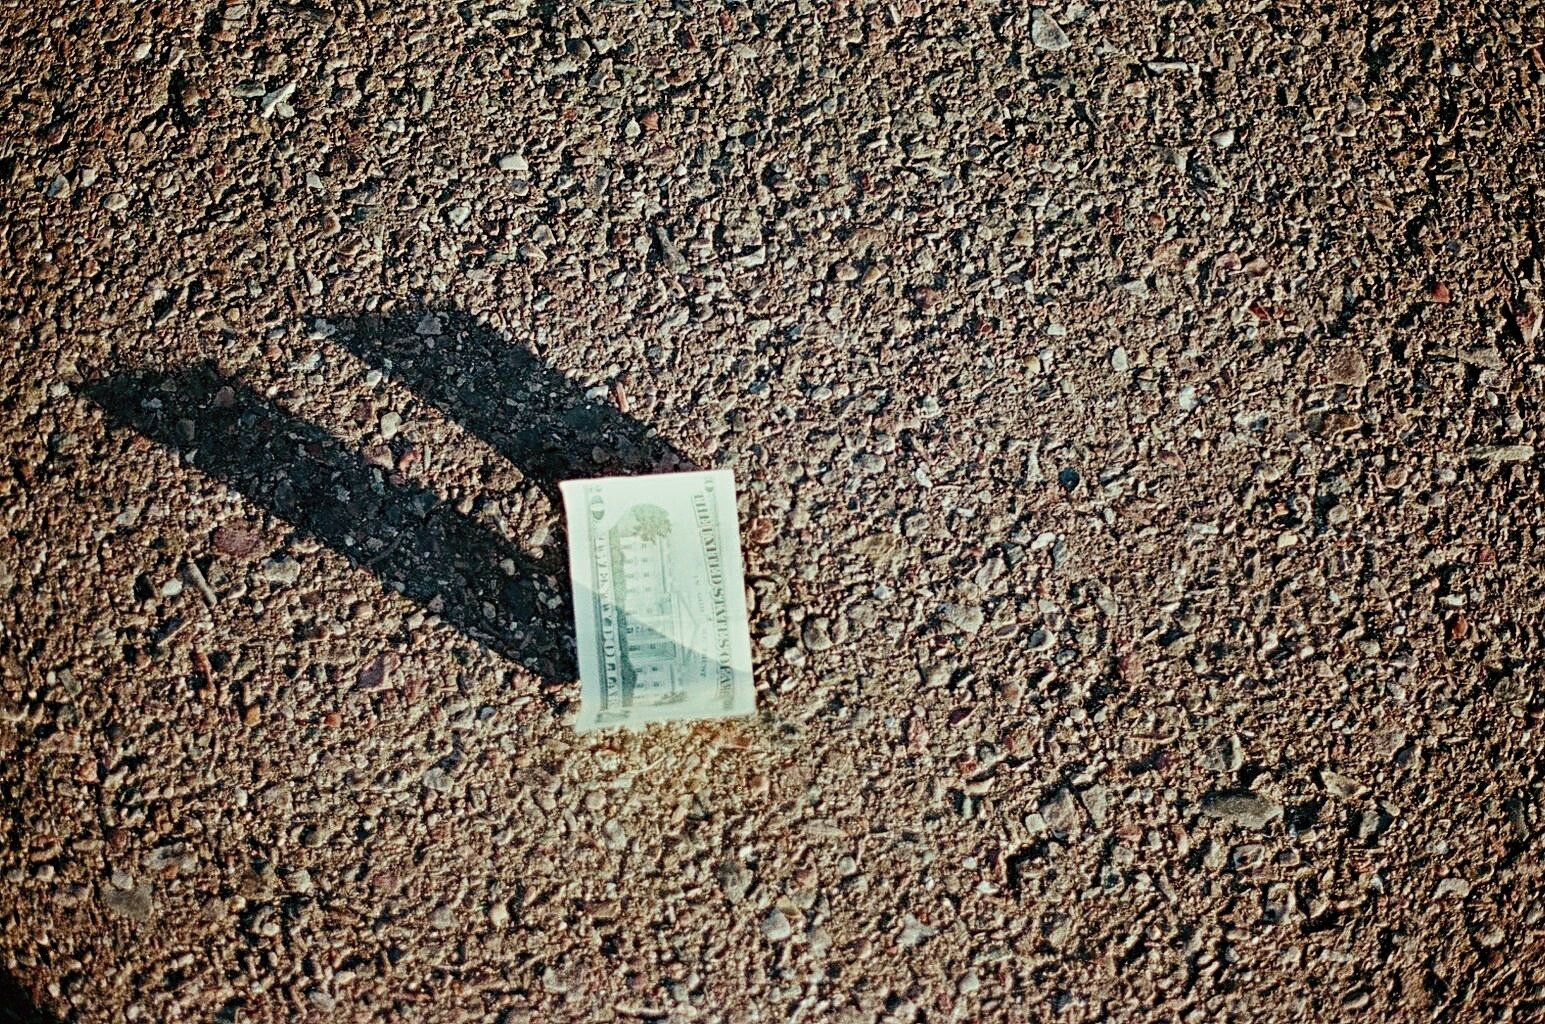 Image of money on the ground